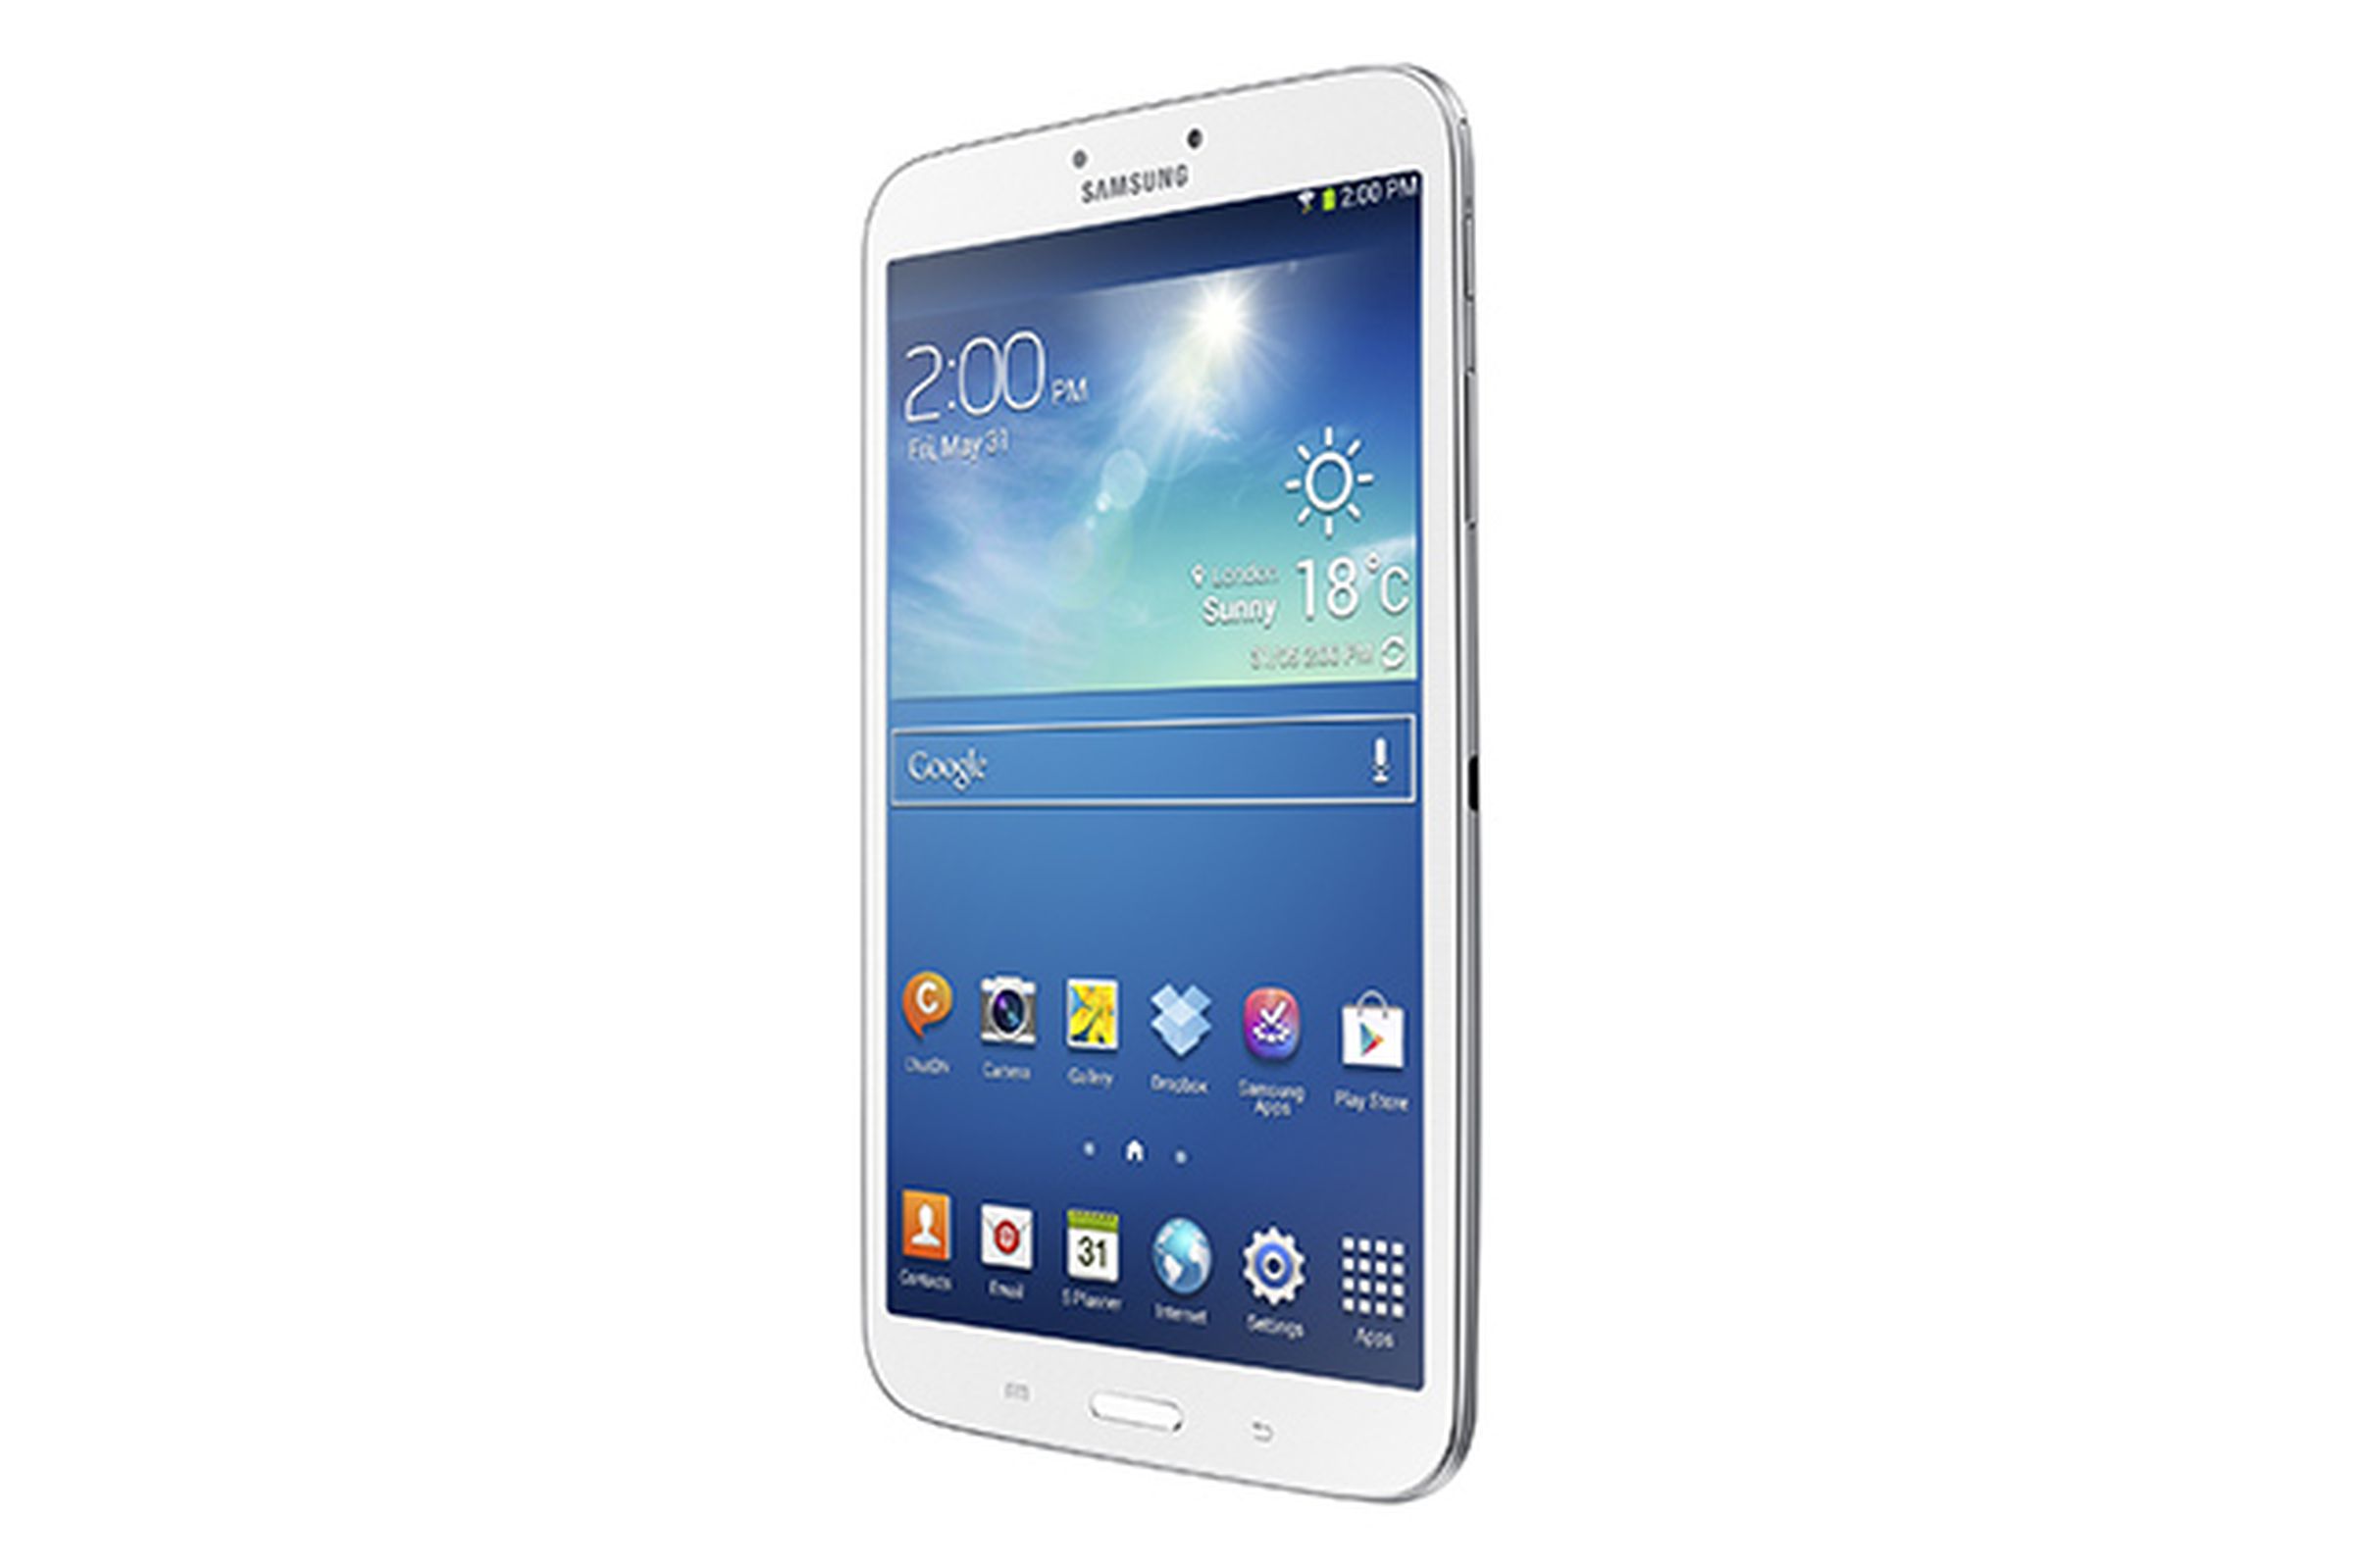 Samsung Galaxy Tab 3 8.0 and 10.1 press images